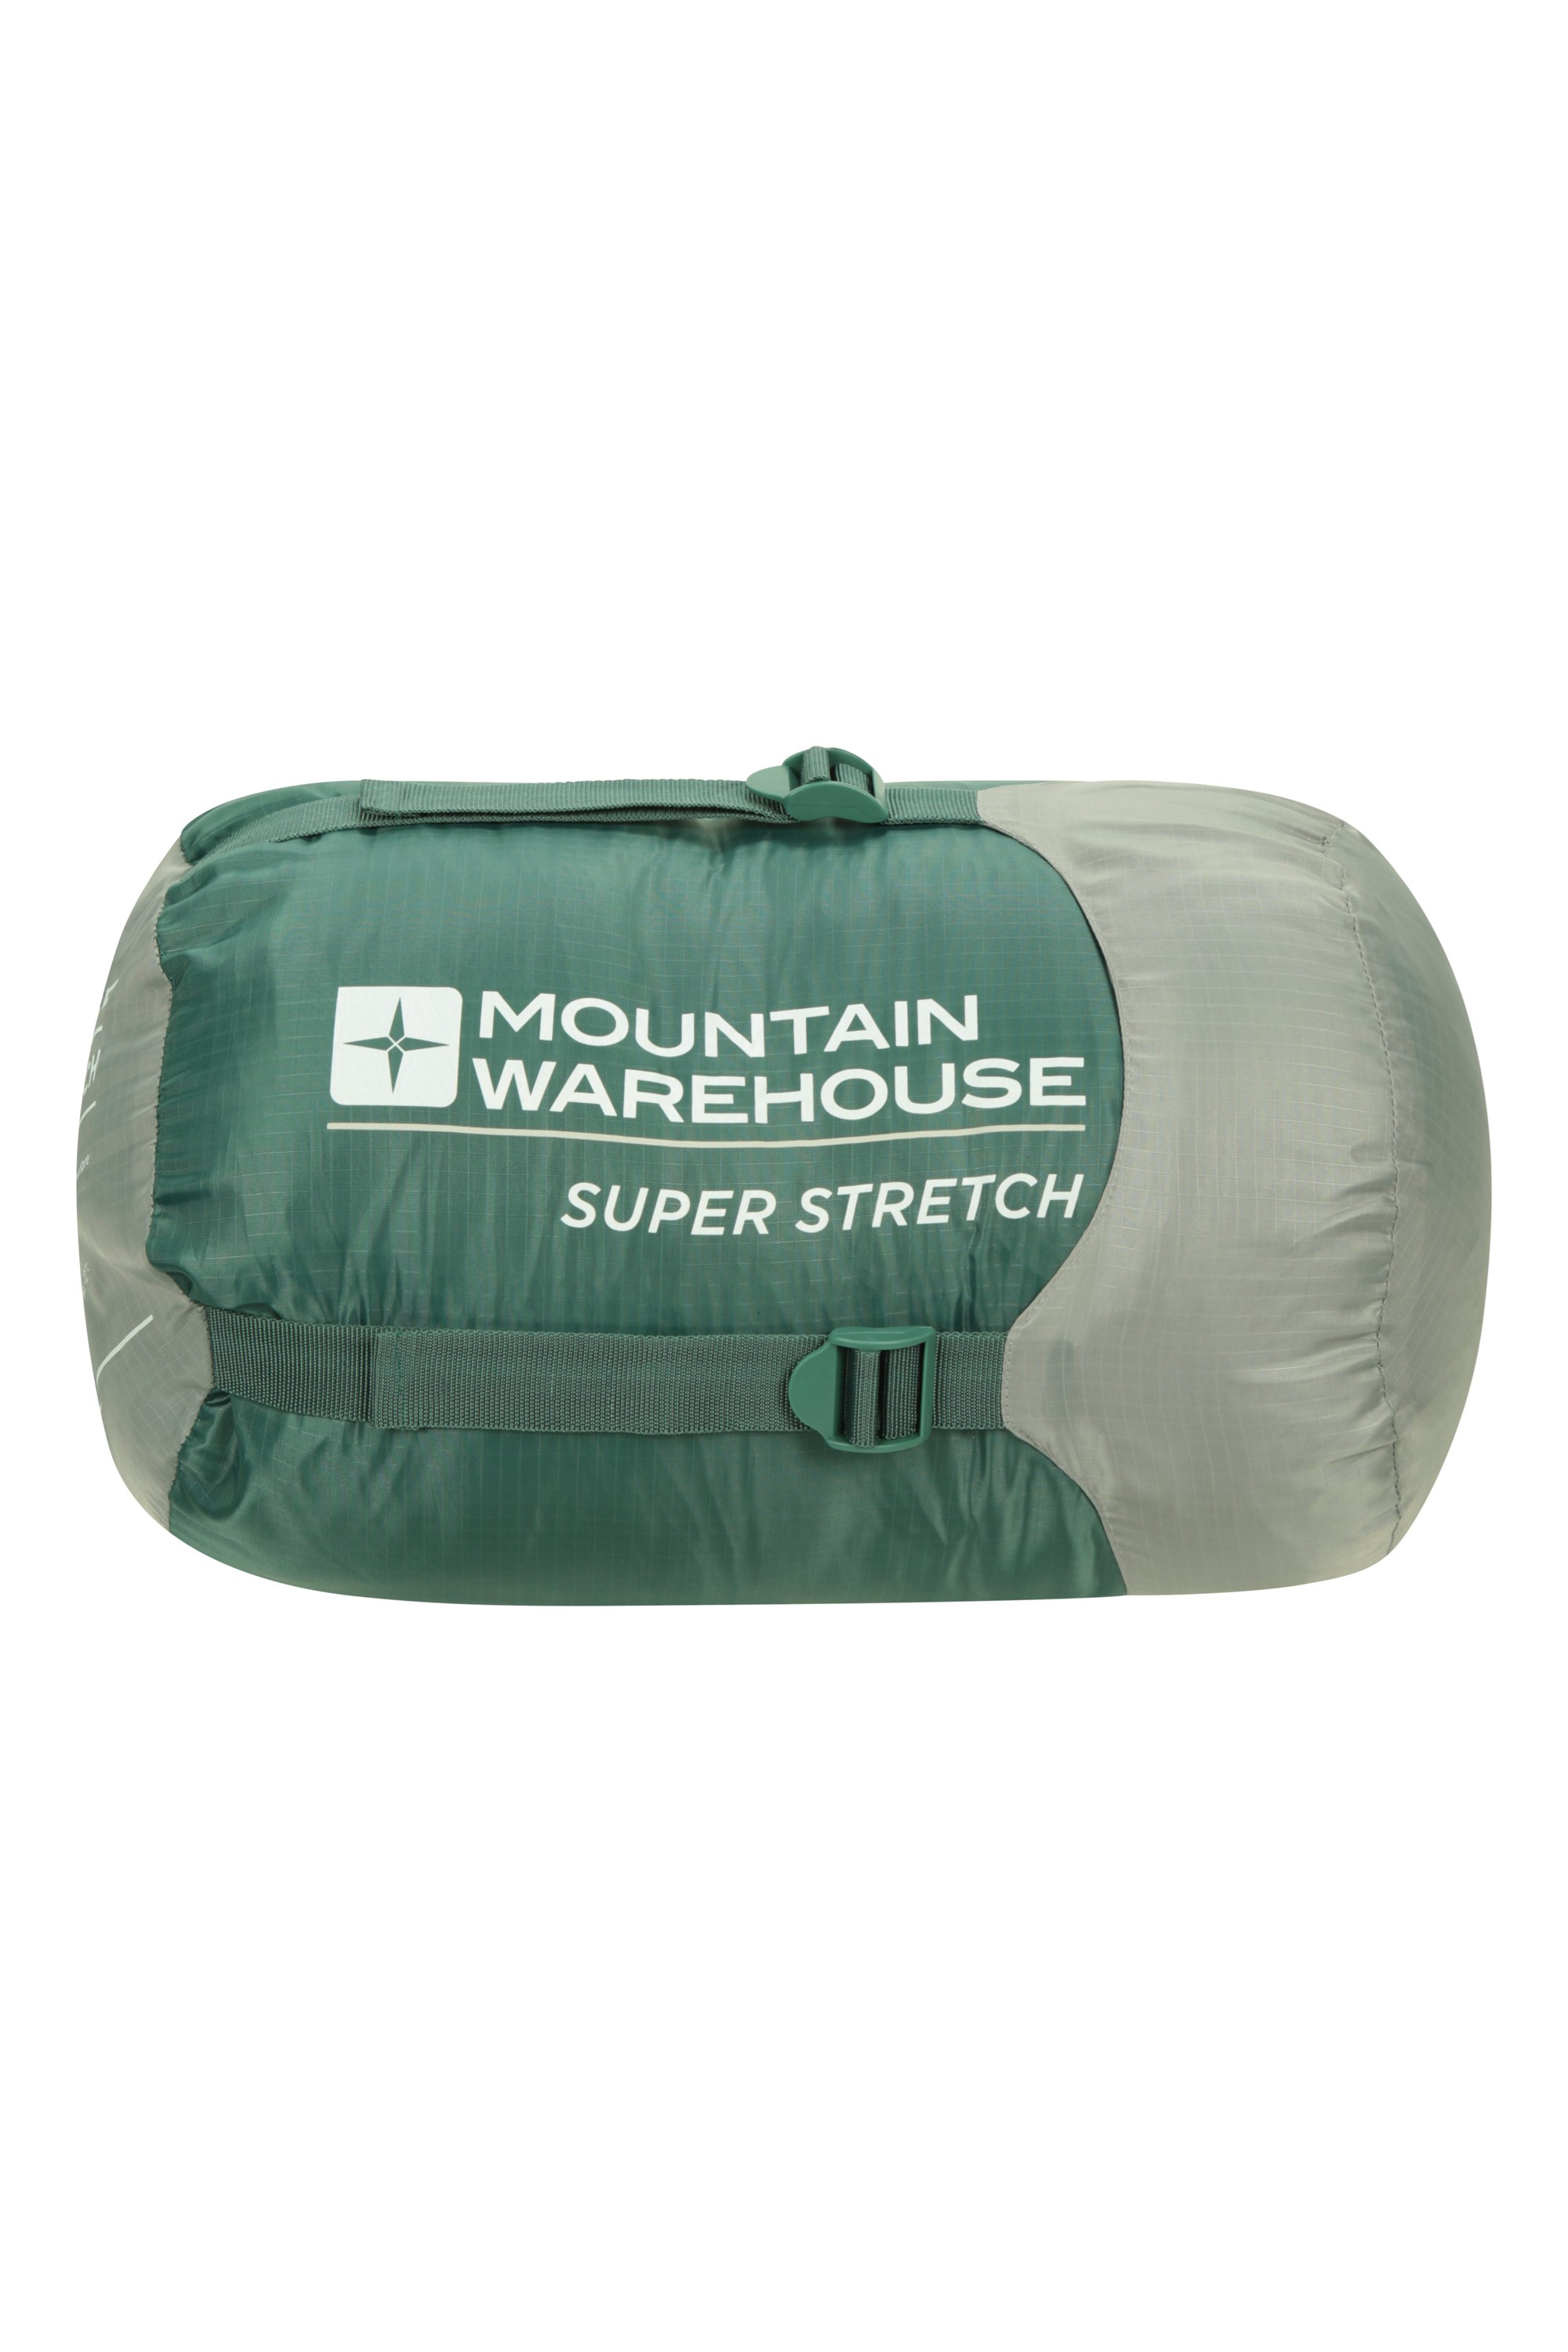 https://img.cdn.mountainwarehouse.com/product/038140/038140_tea_super_stretch_sleeping_bag_har_aw21_01.jpg